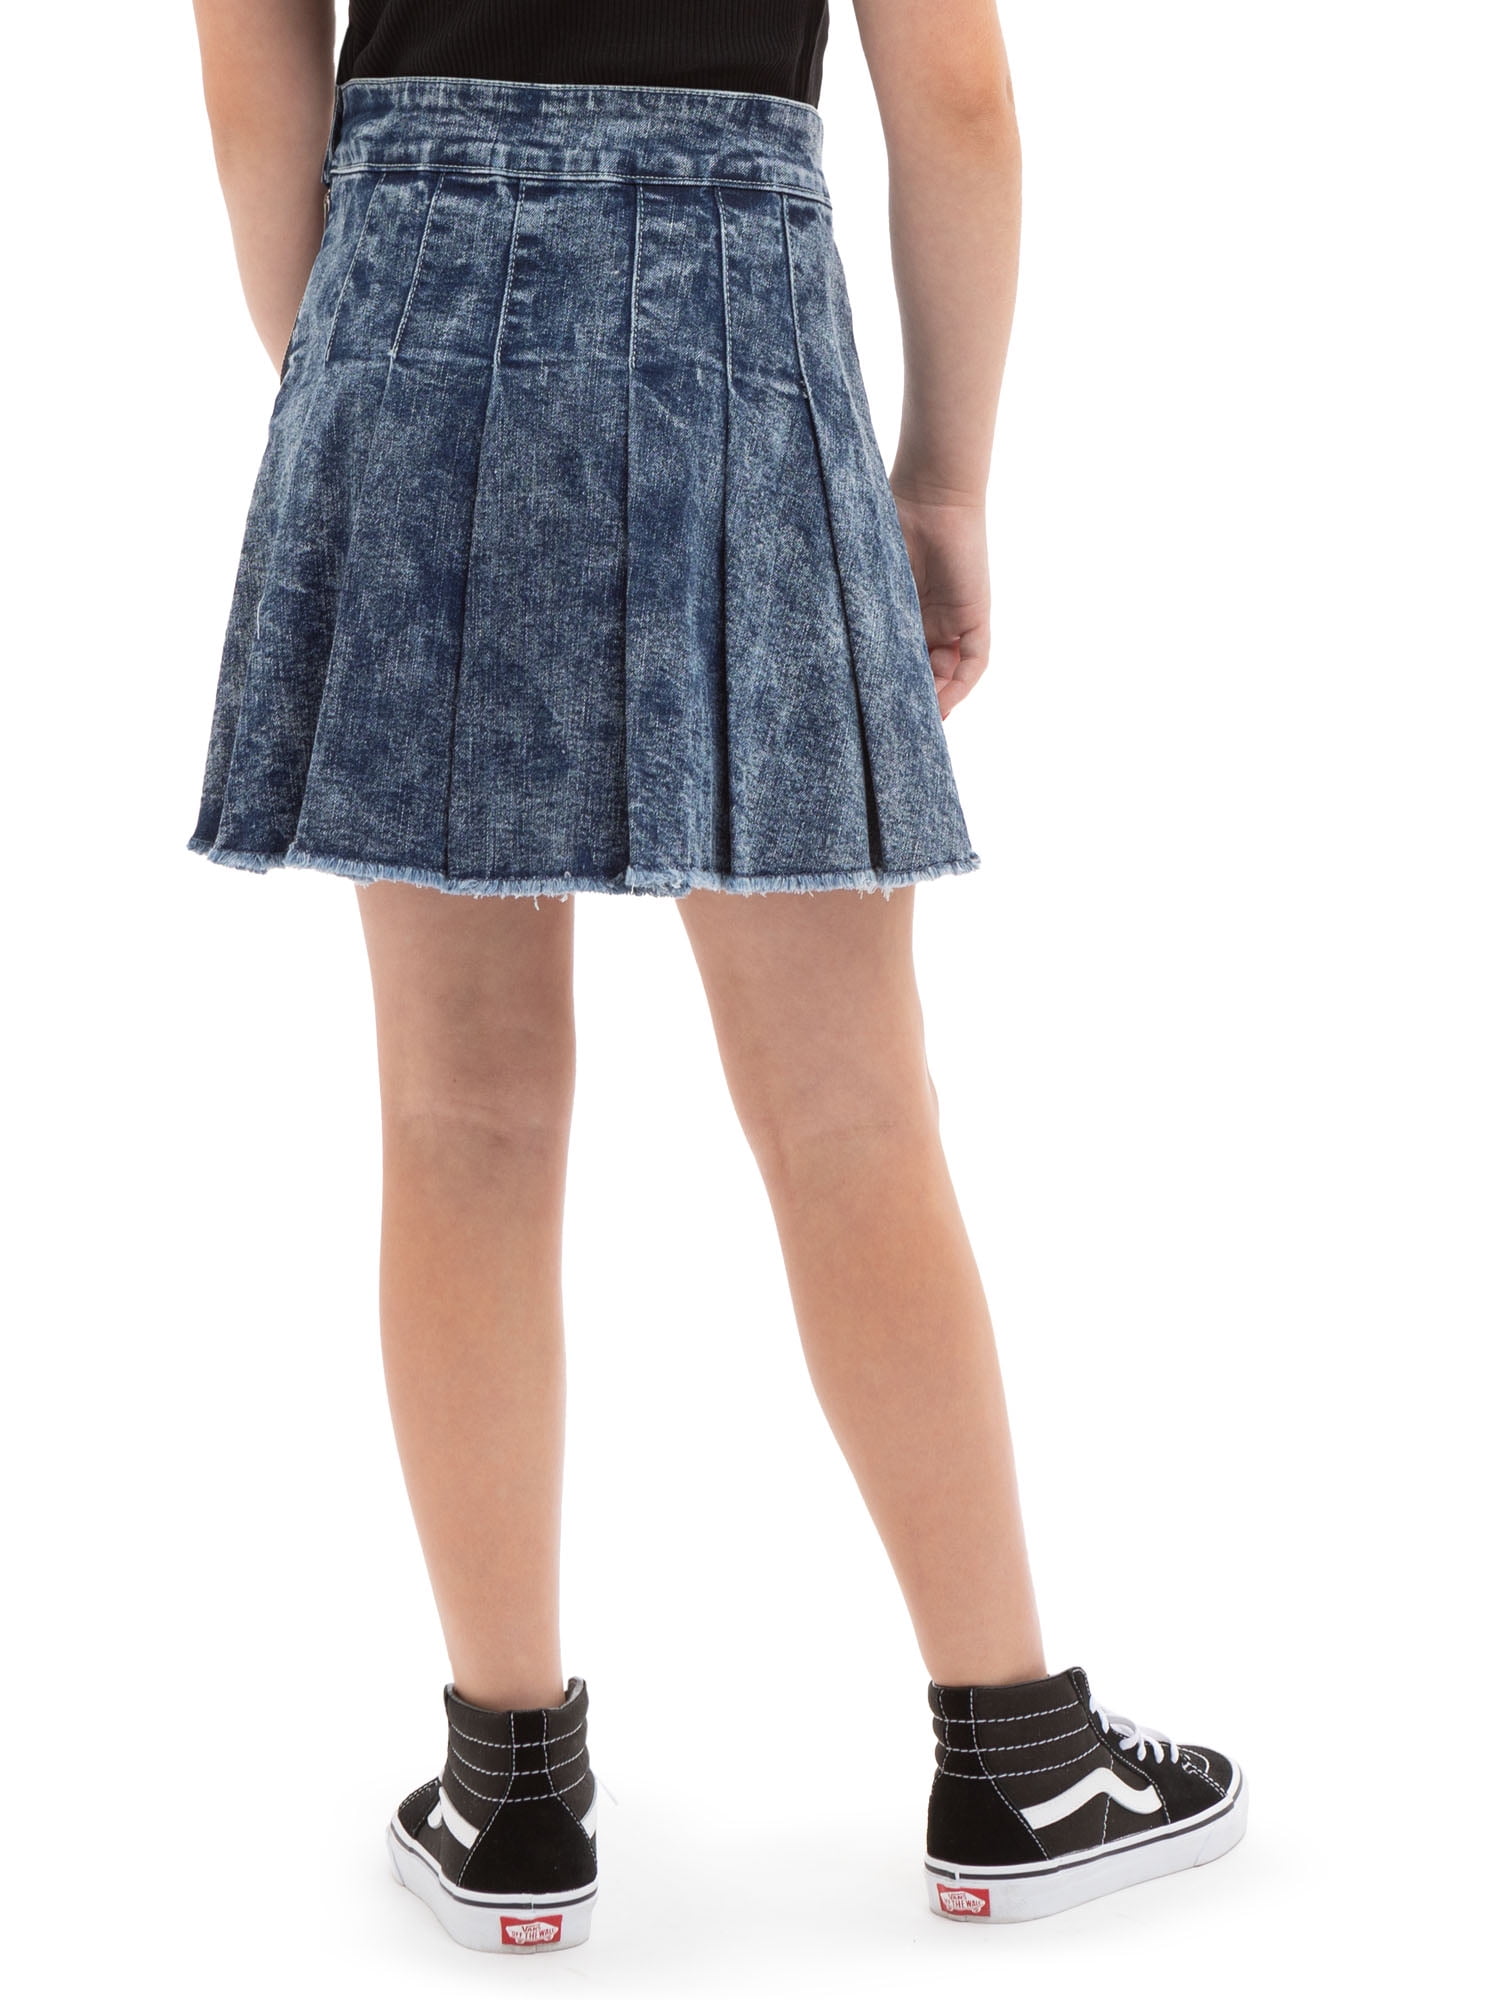 Leah Acid Wash Denim Skirt - The Klassy Girl Boutique